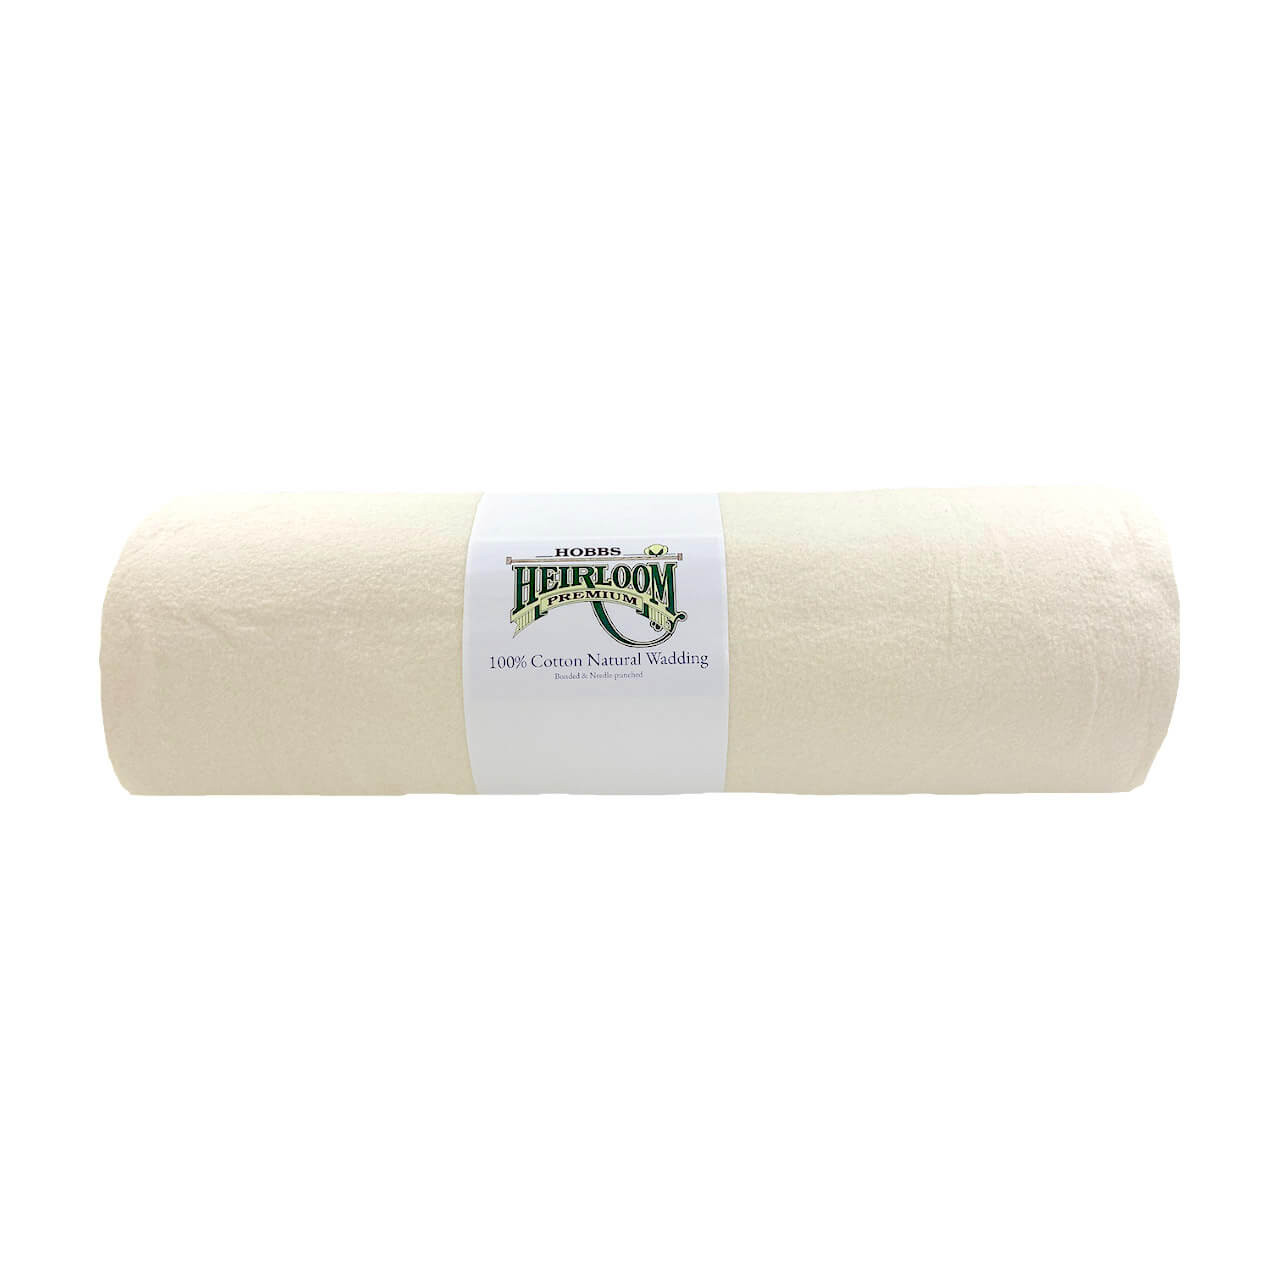 Heirloom Premium 100% Natural Cotton Wadding - 96" Wide 7.5 metre roll